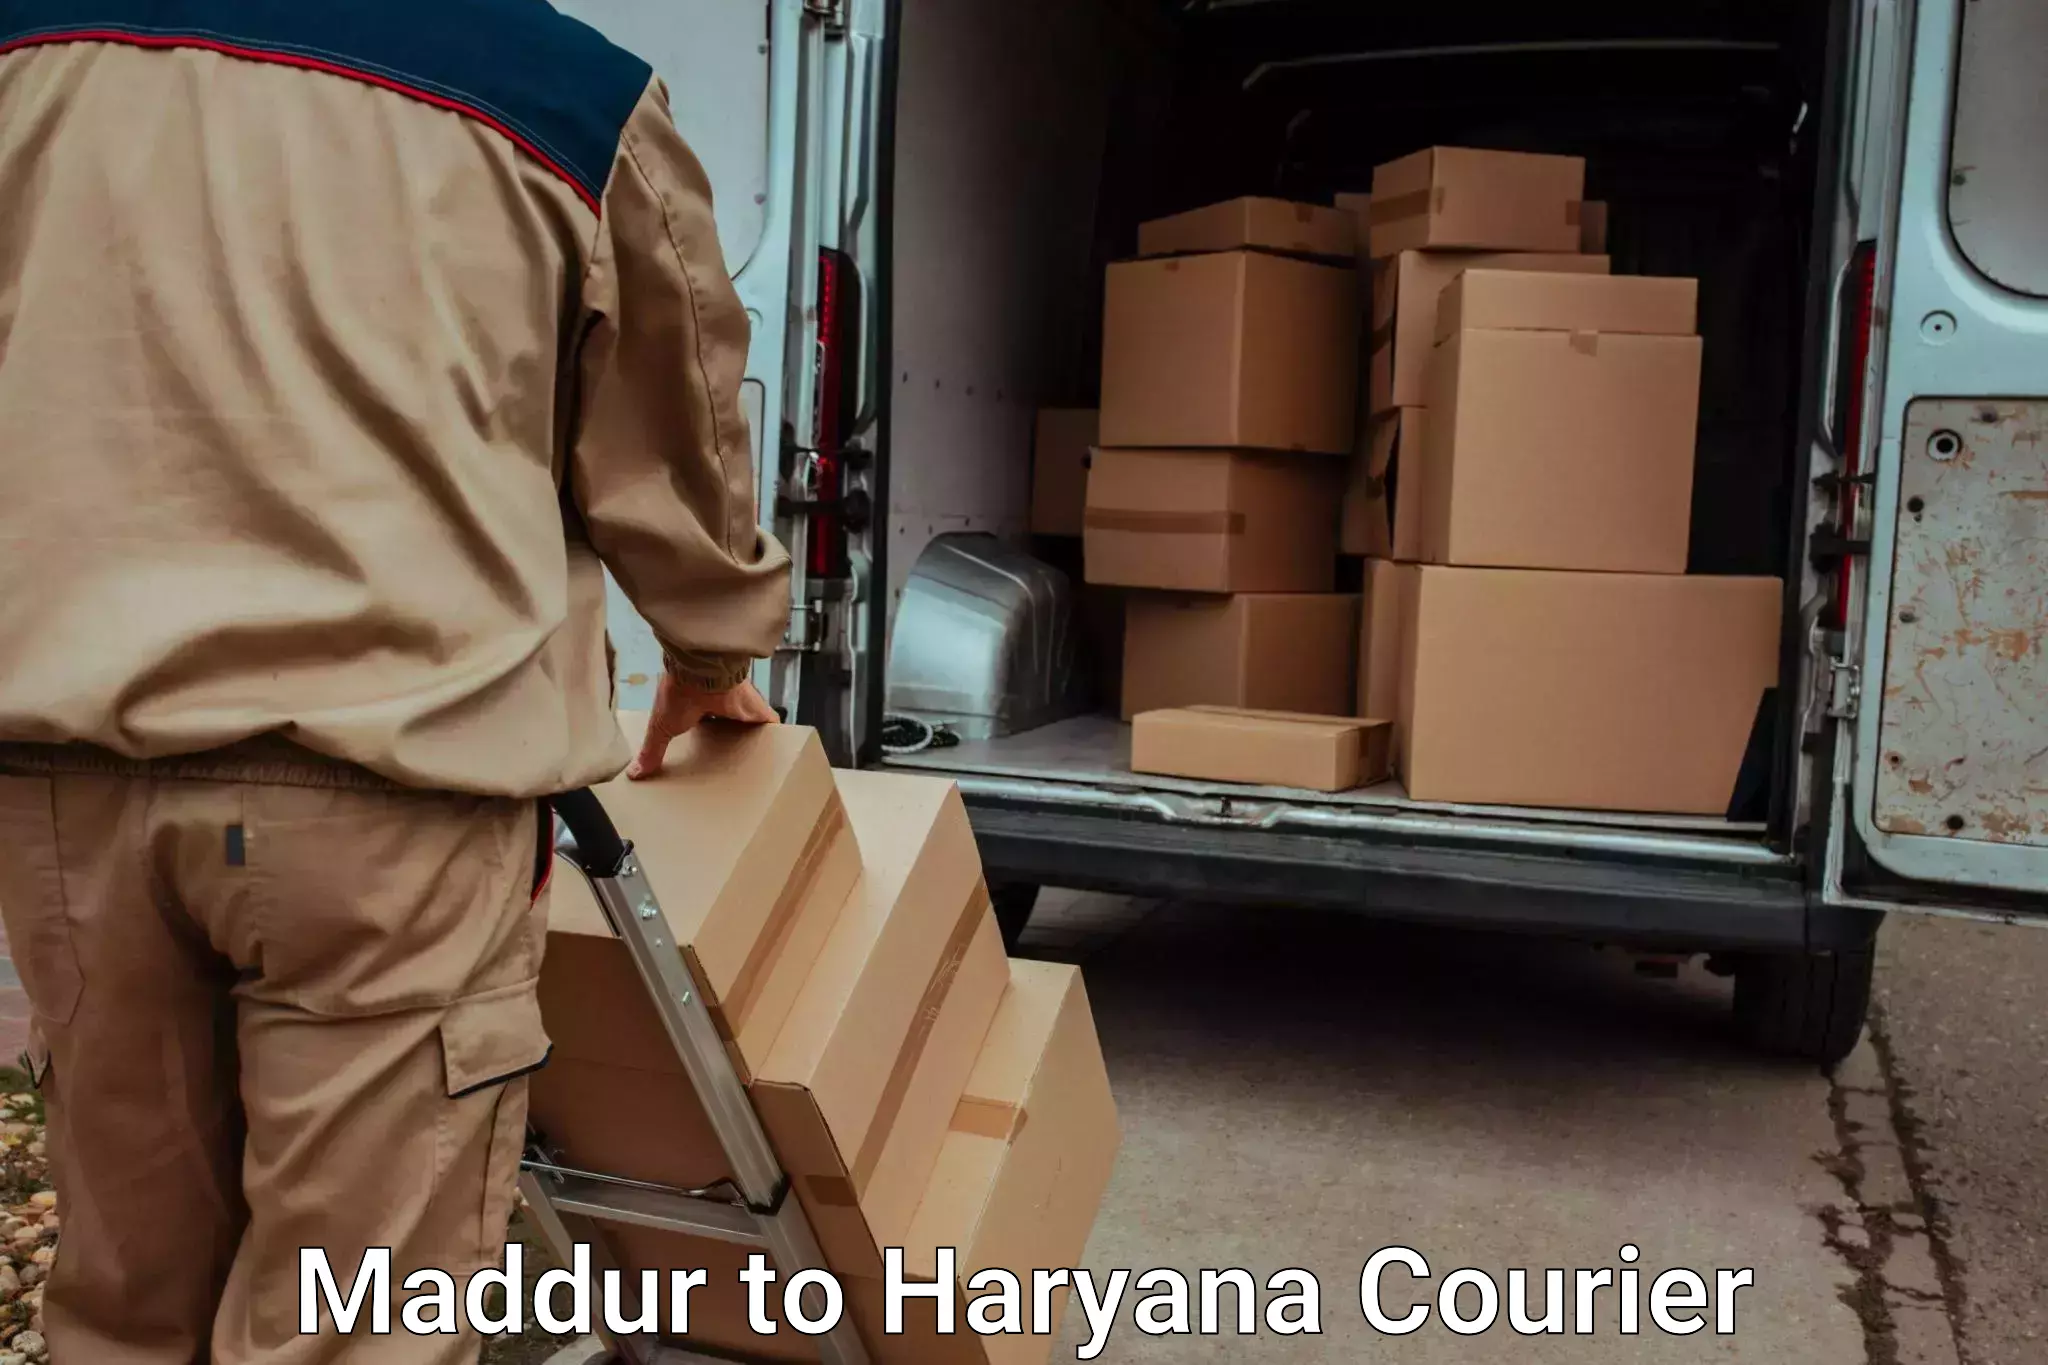 Professional moving company Maddur to Haryana